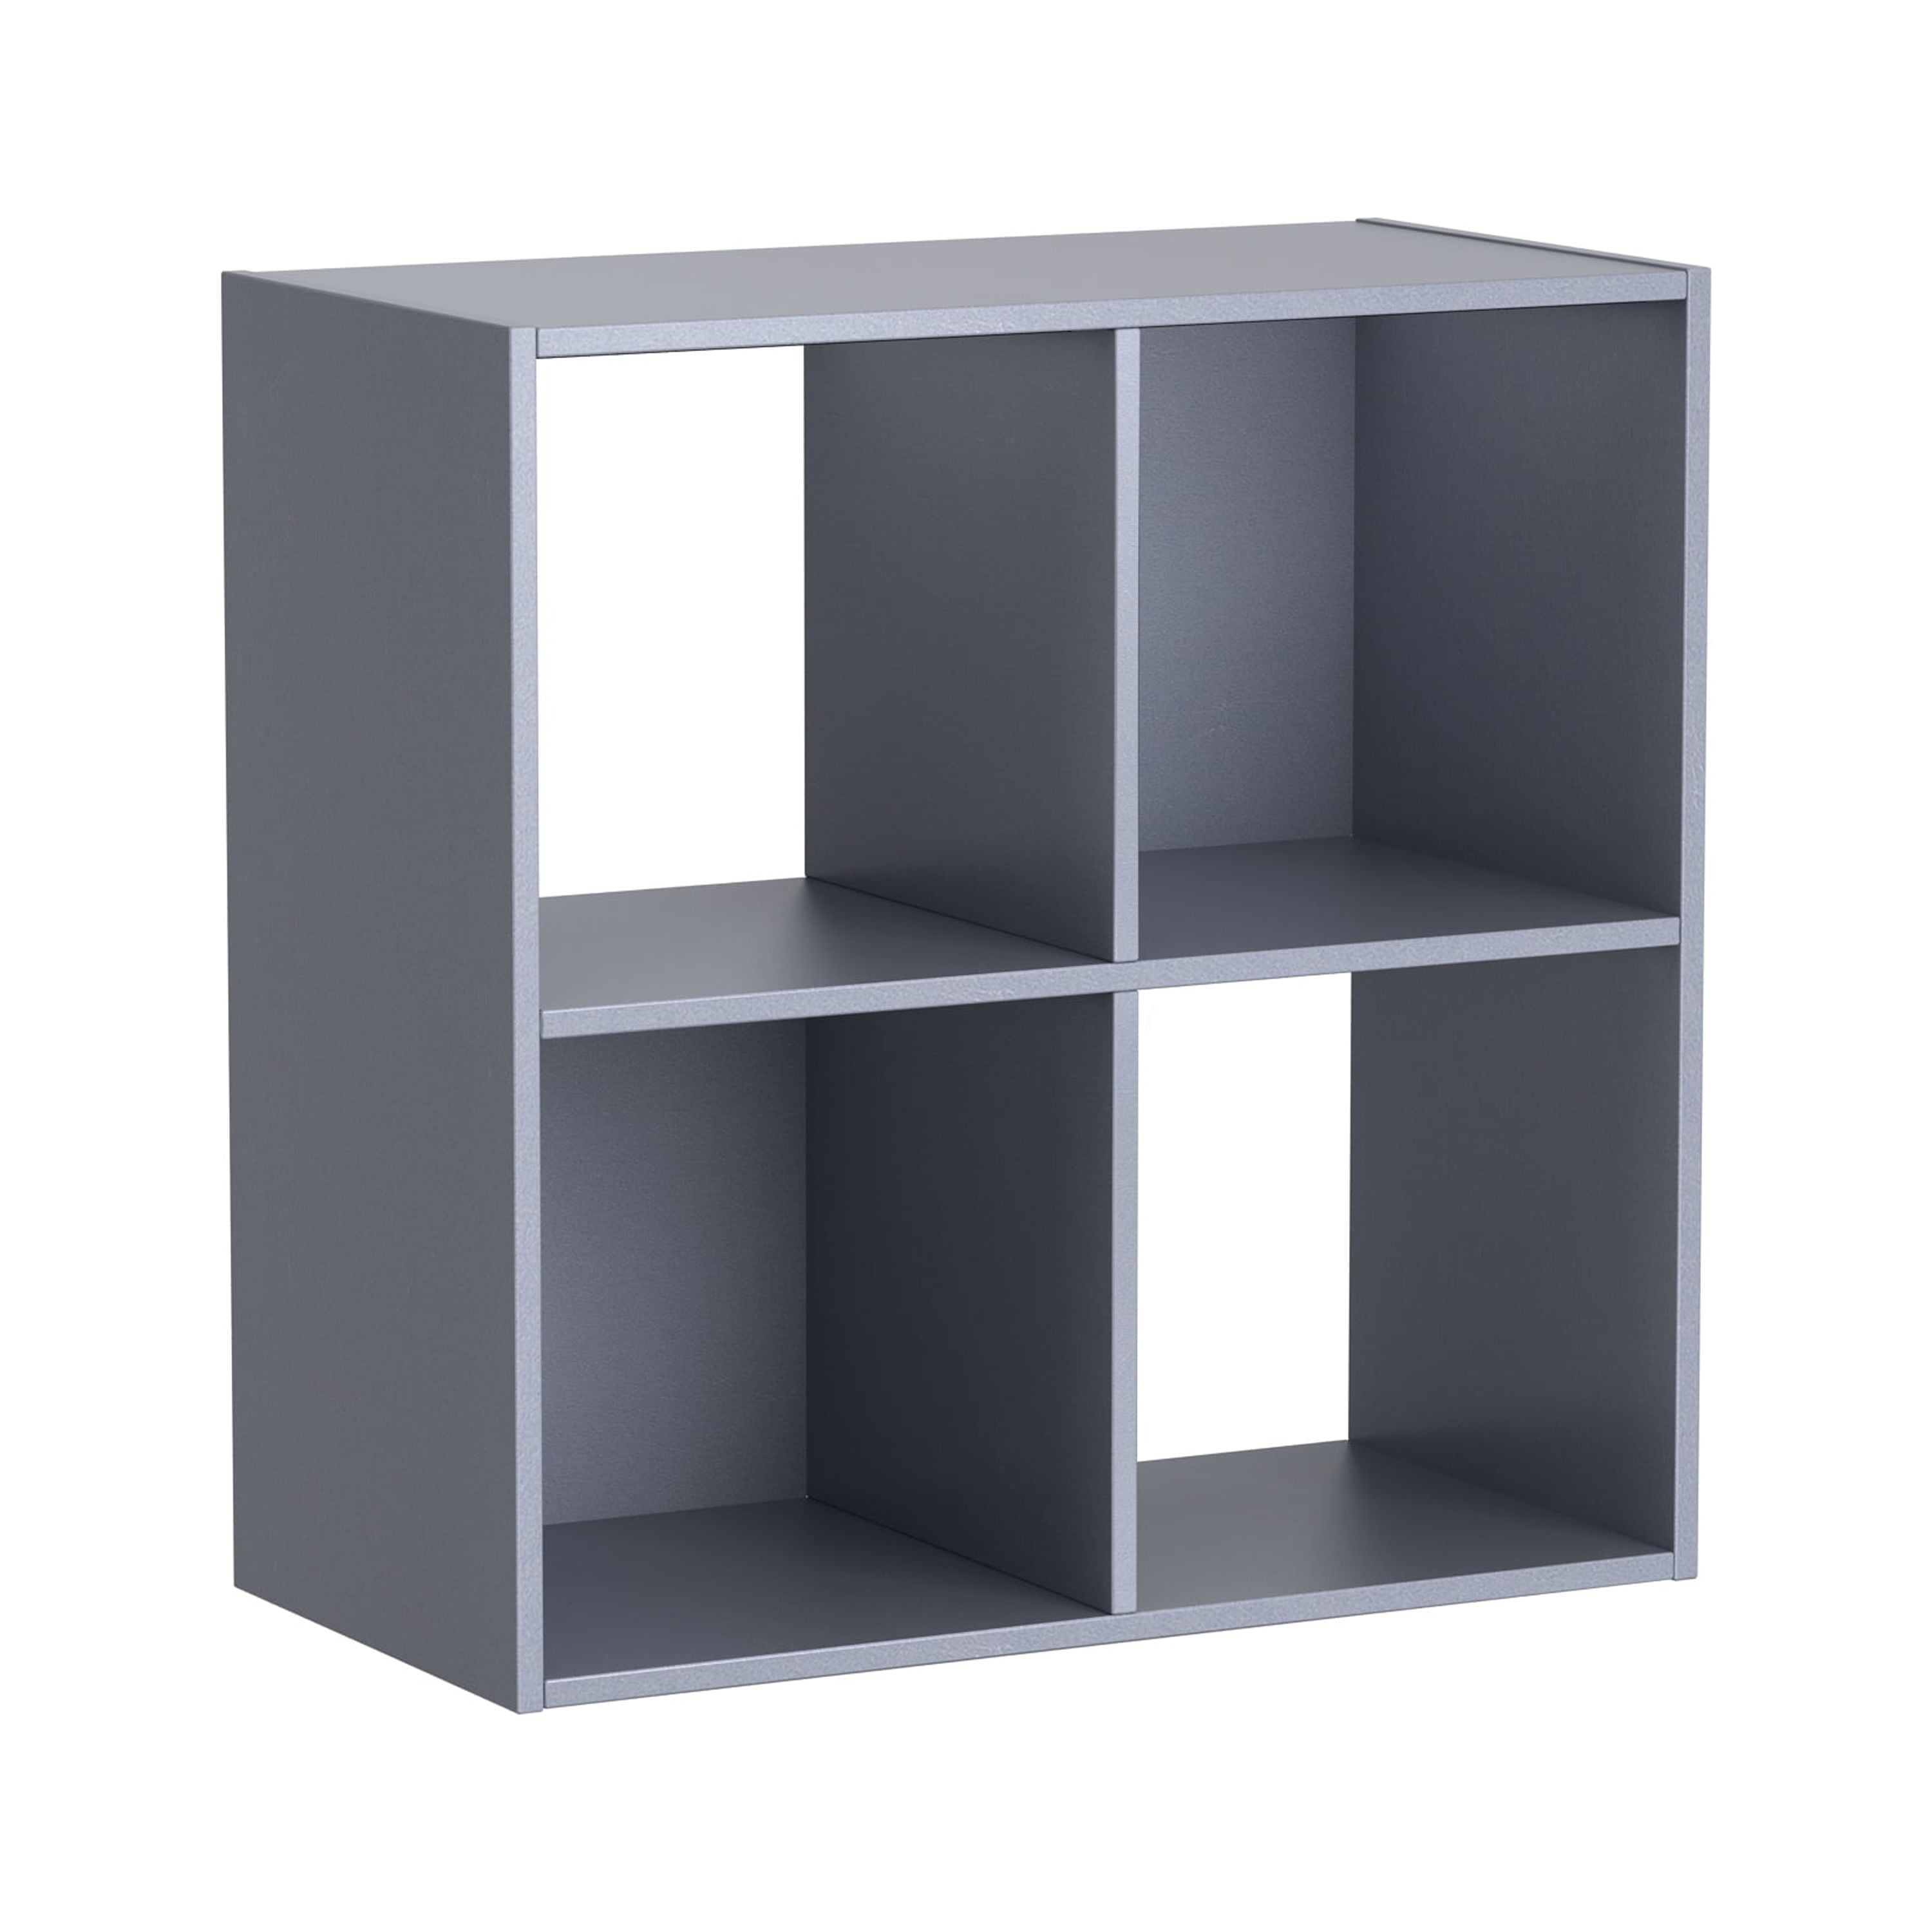 Wooden Cube Shelf Organizer Set Table. Includes Six Fabric Grey Storage Bins!